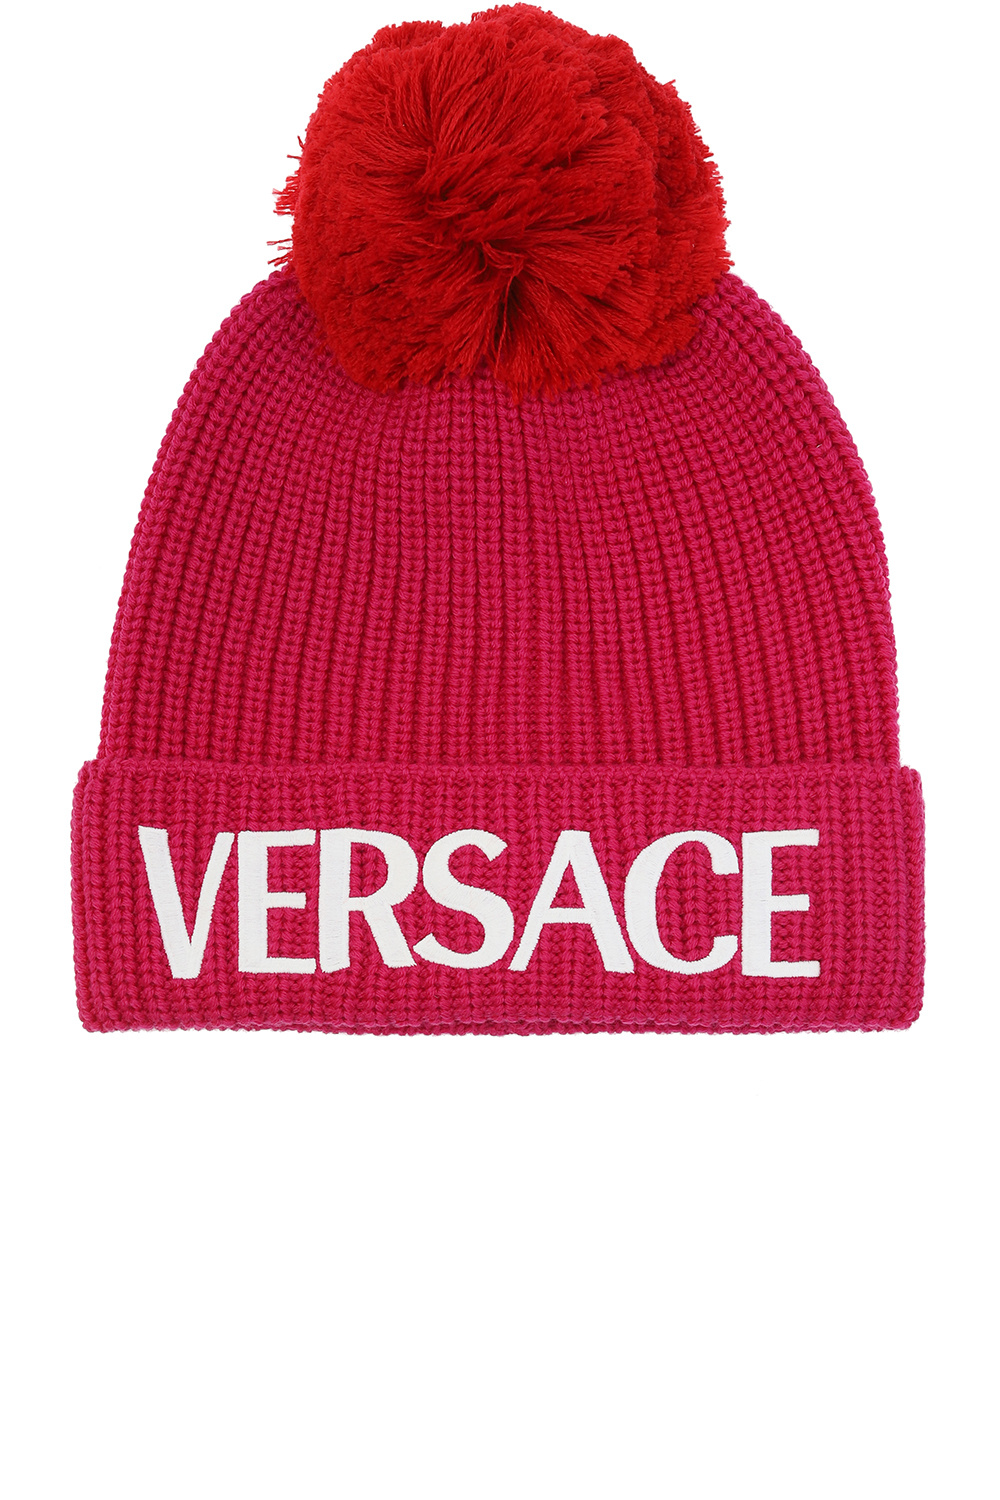 Versace Pom-pom hat